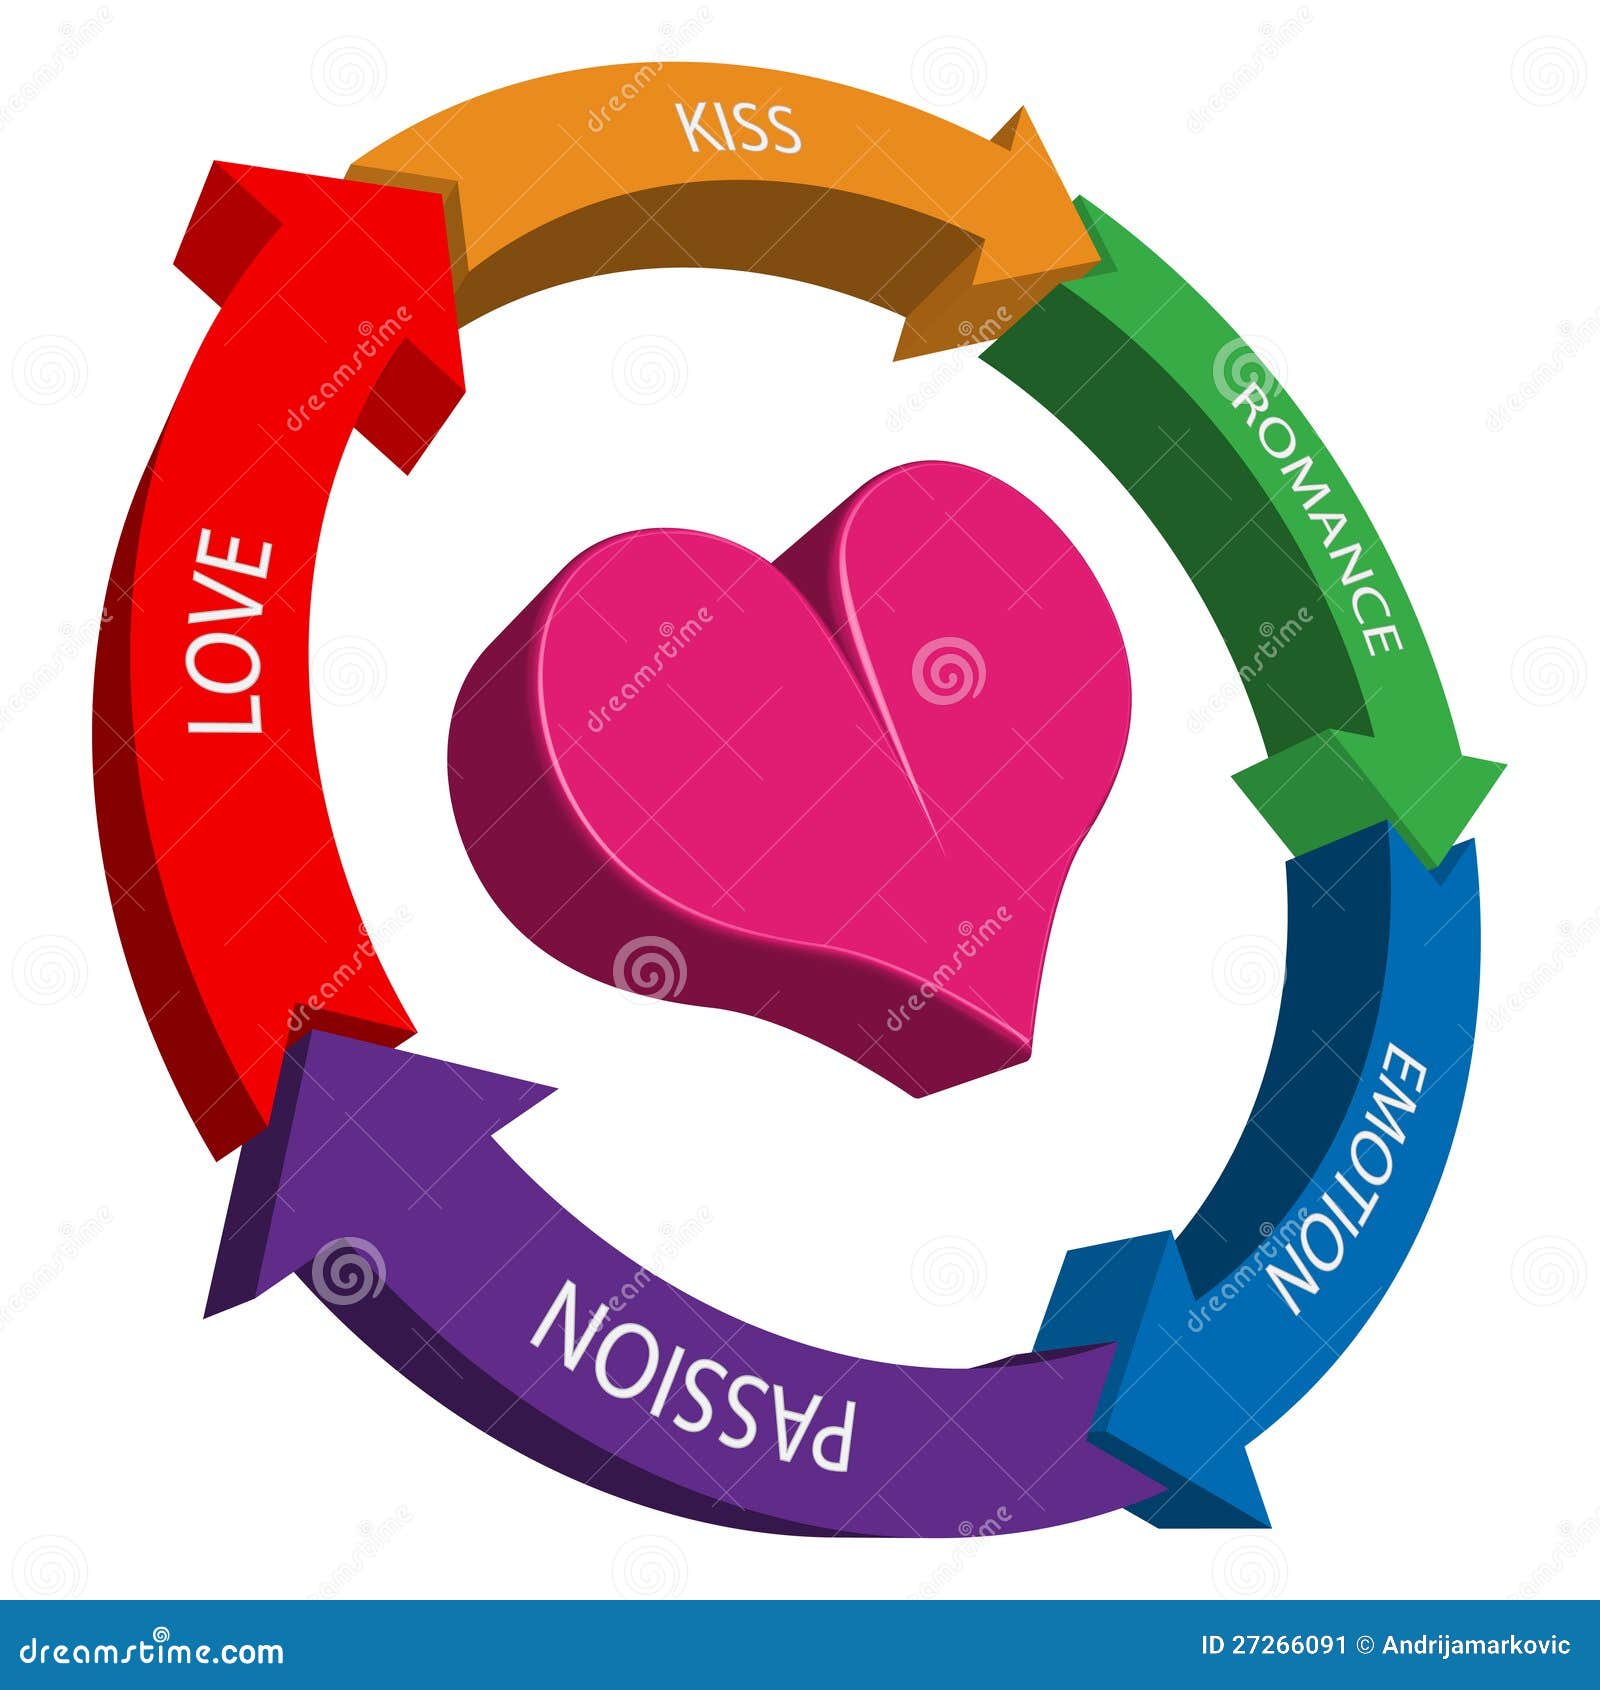 Circle of love stock vector. Illustration of valentine 27266091